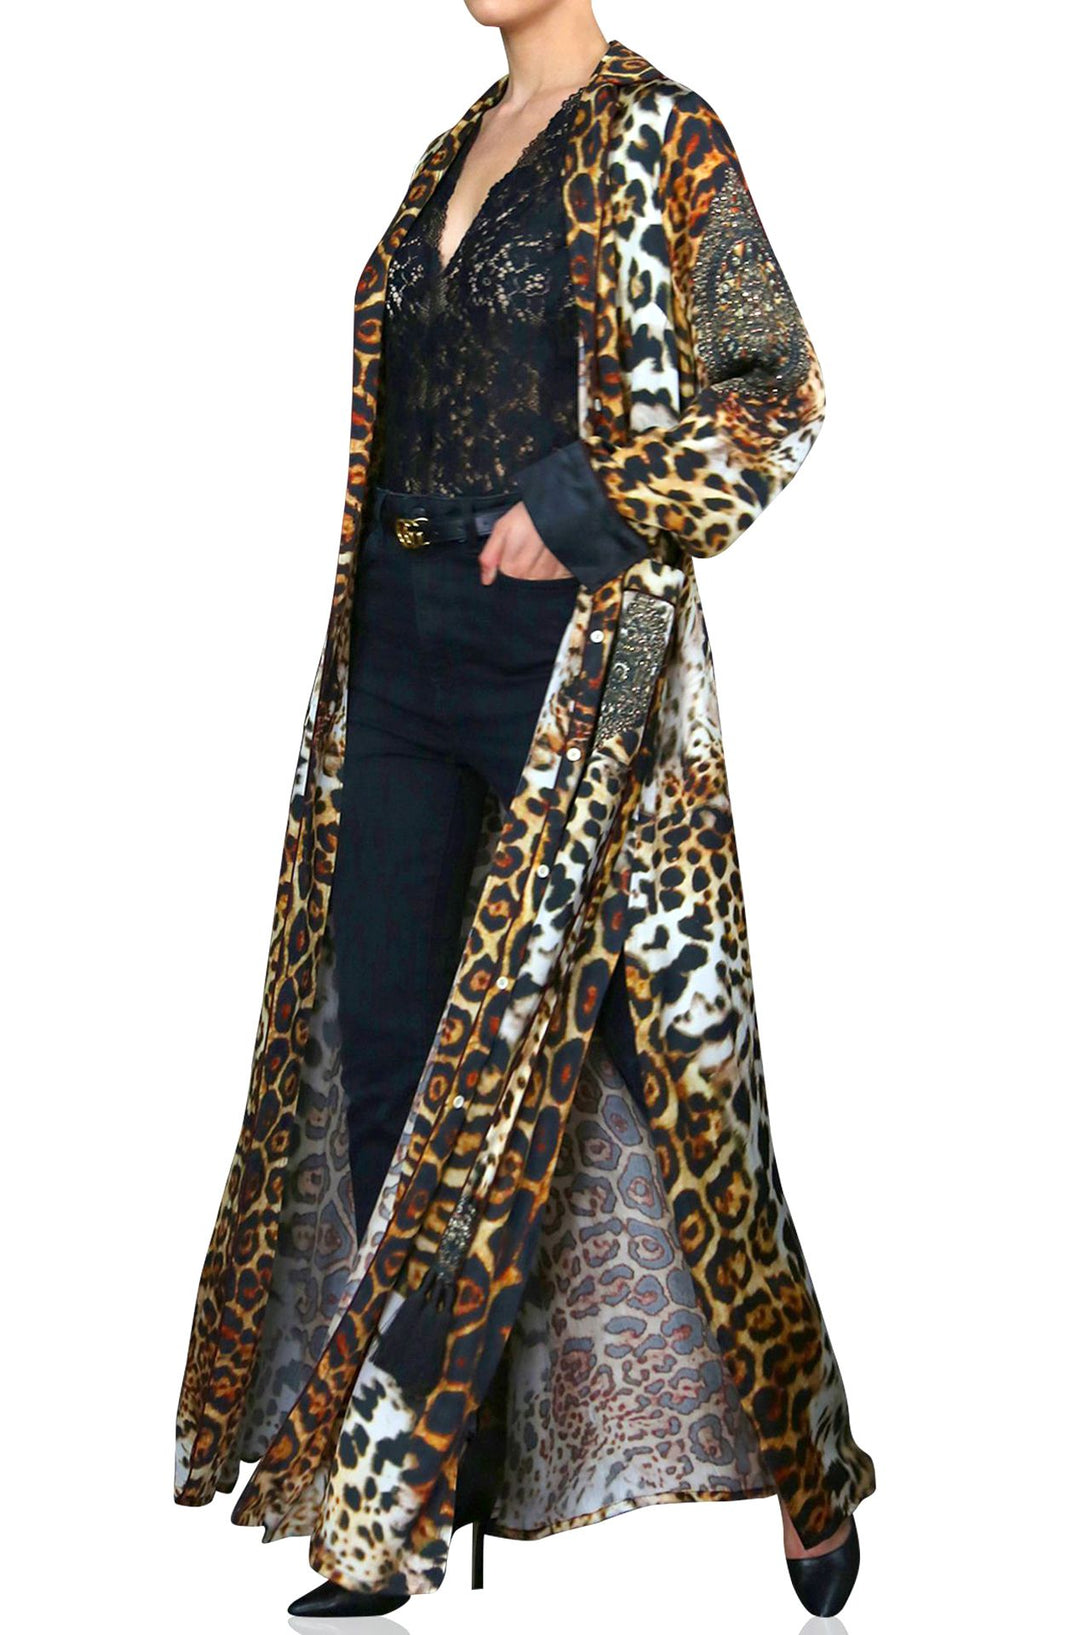 "Shahida Parides" "silk leopard robe" "long kimono silk robe" "silk kimono womens" "kimono silk robes for women" "robe dress silk"